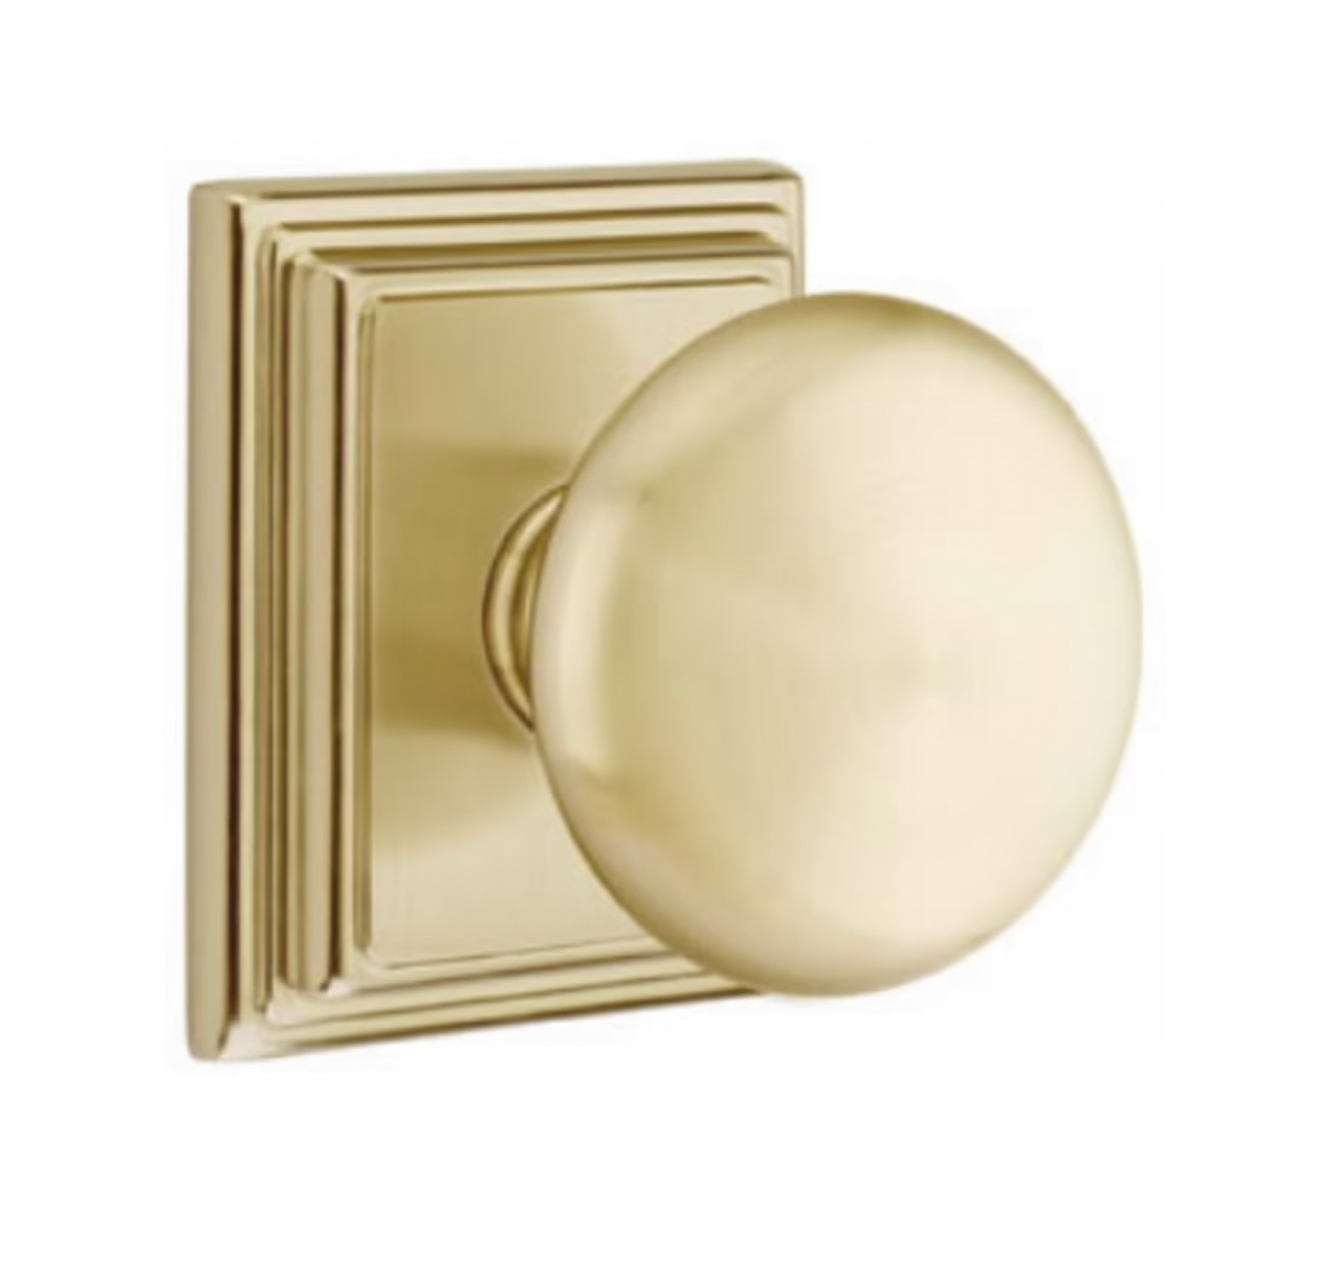 Round Door Knob "Provence" w/ Square Ridge Rosette in Satin Brass